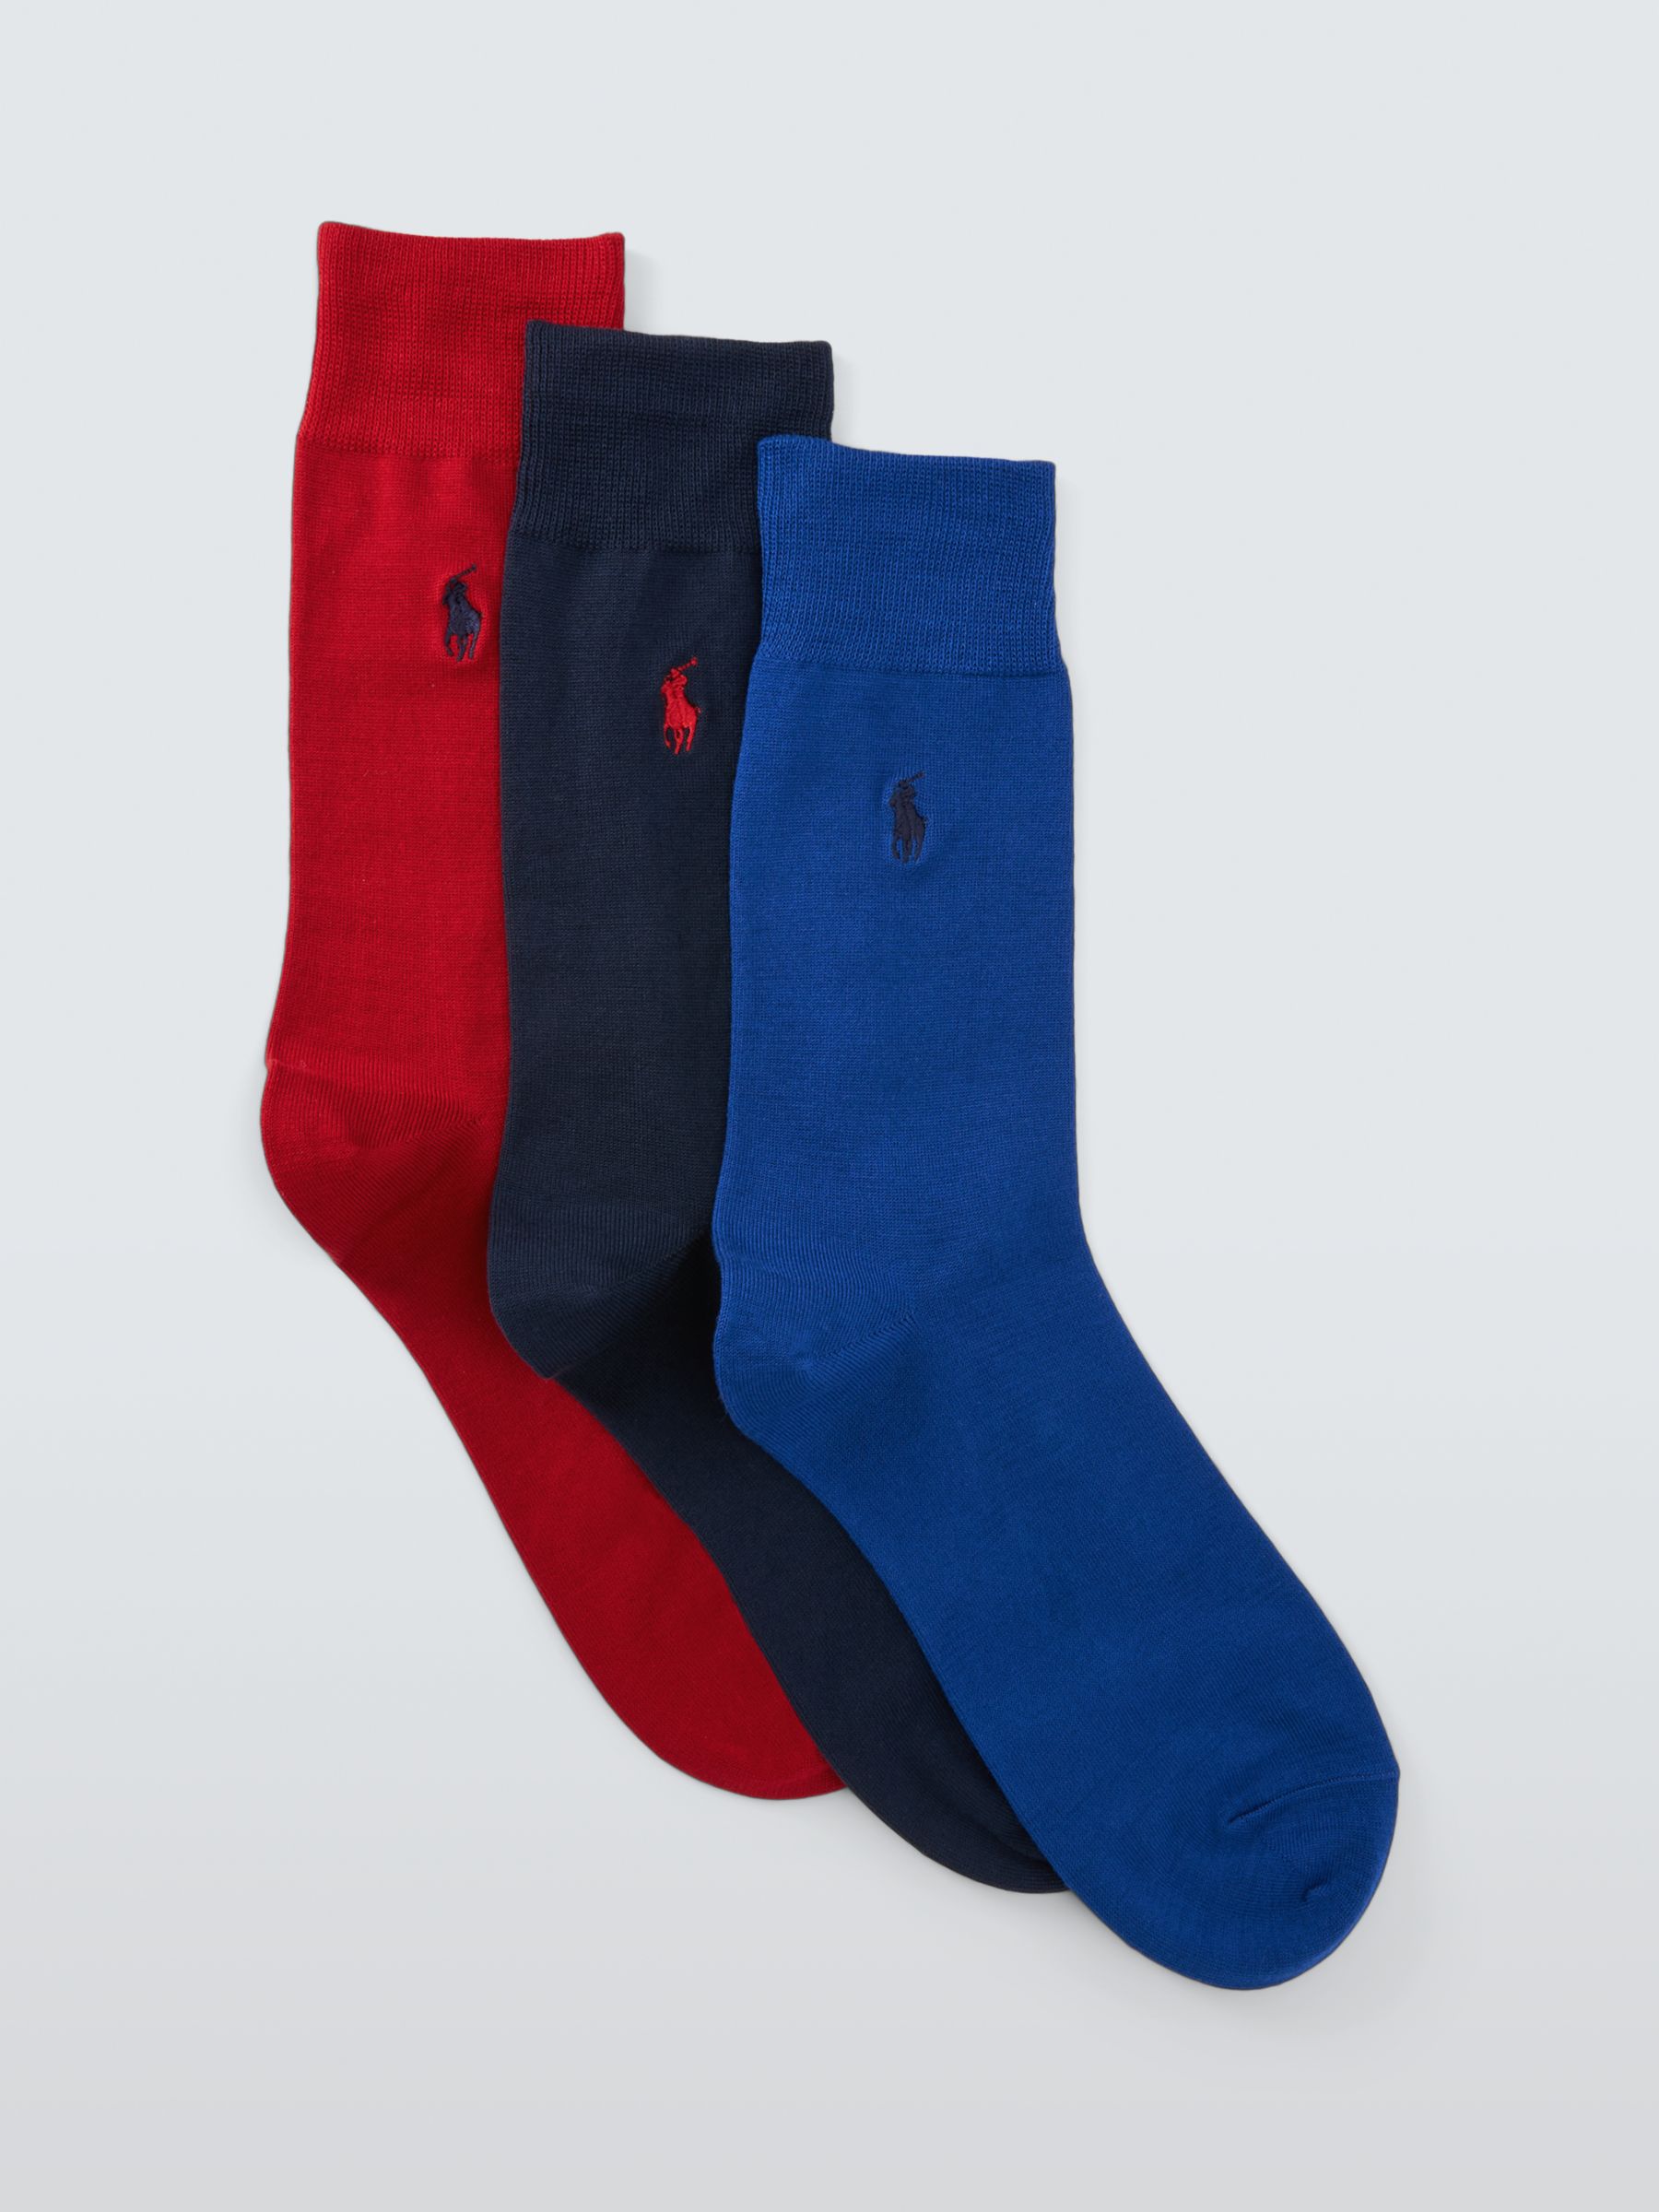 Ralph Lauren Mercerised Cotton Crew Socks, Pack of 3, Multi, S-M